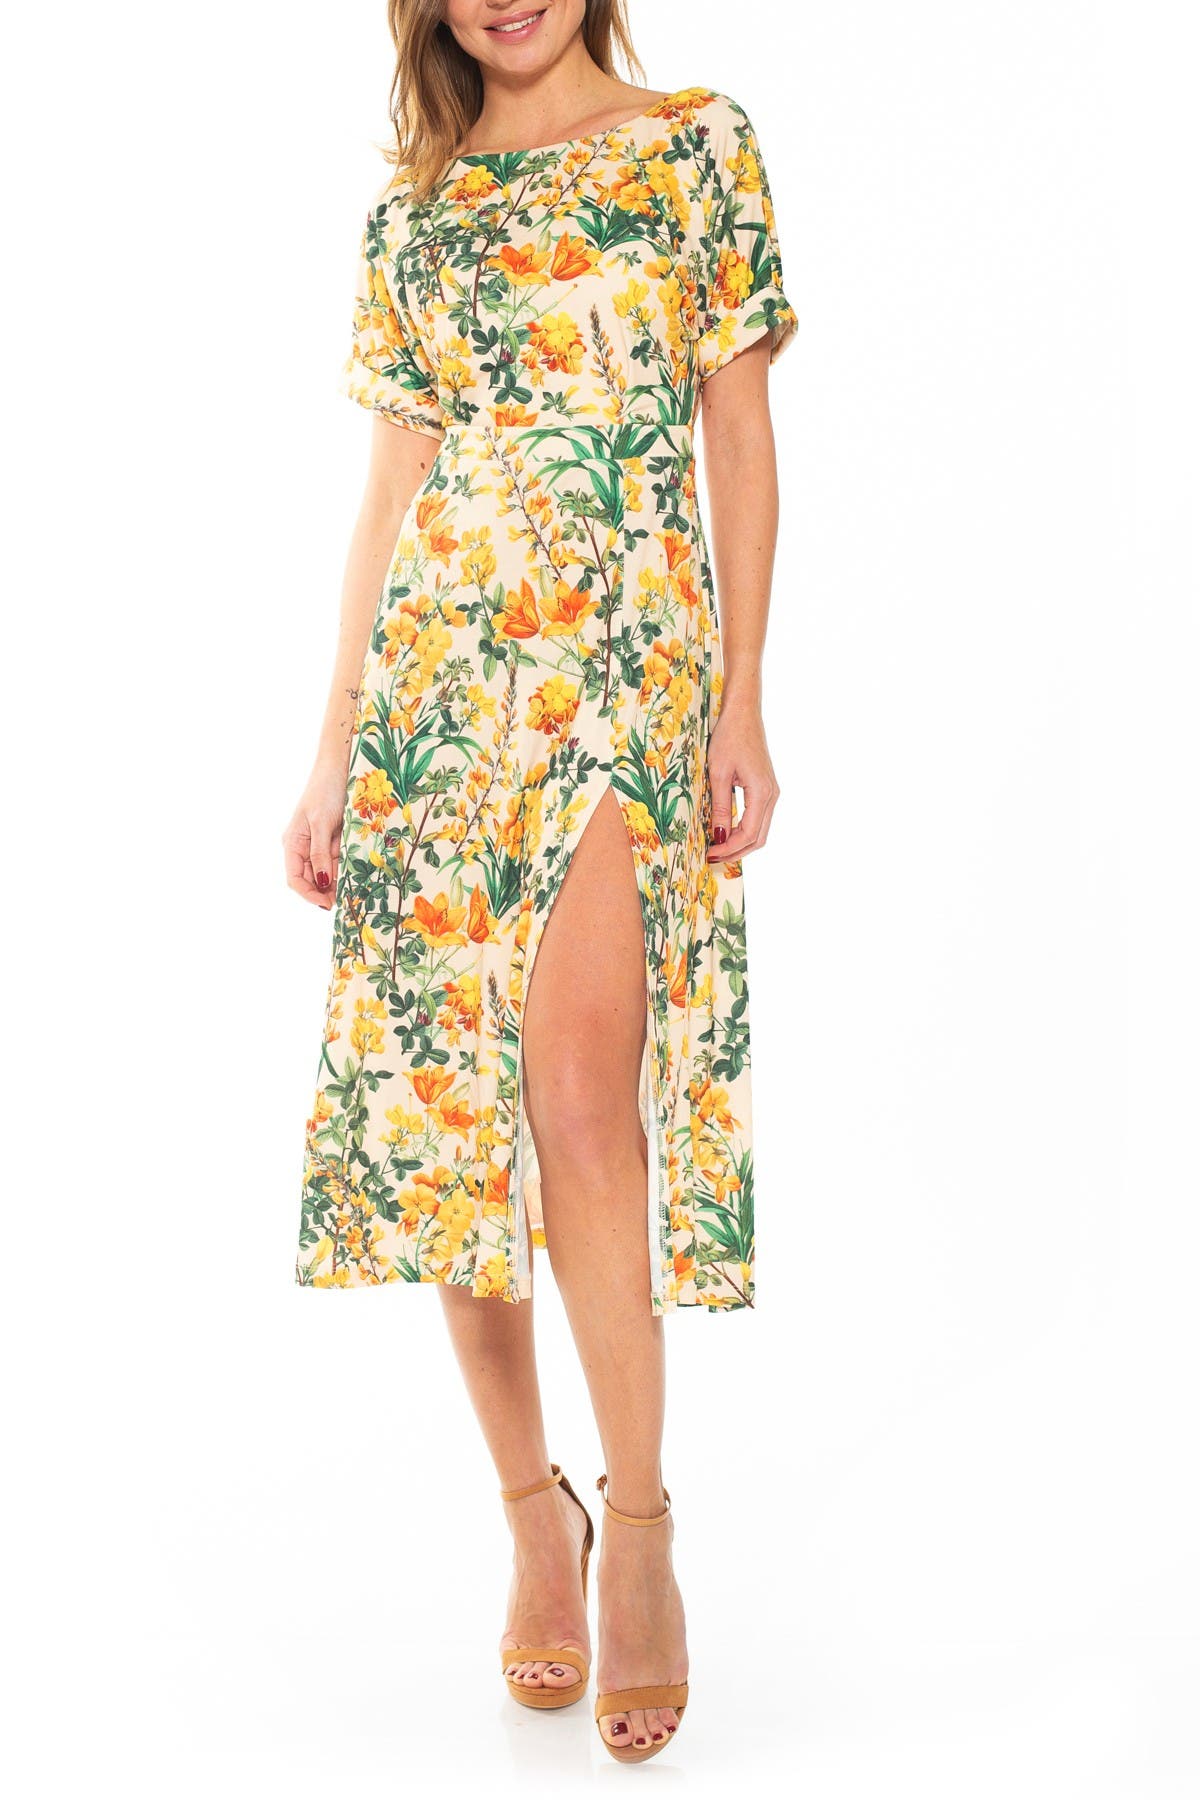 Alexia Admor Lana Draped Bodice Floral Midi Dress In Open Yellow3